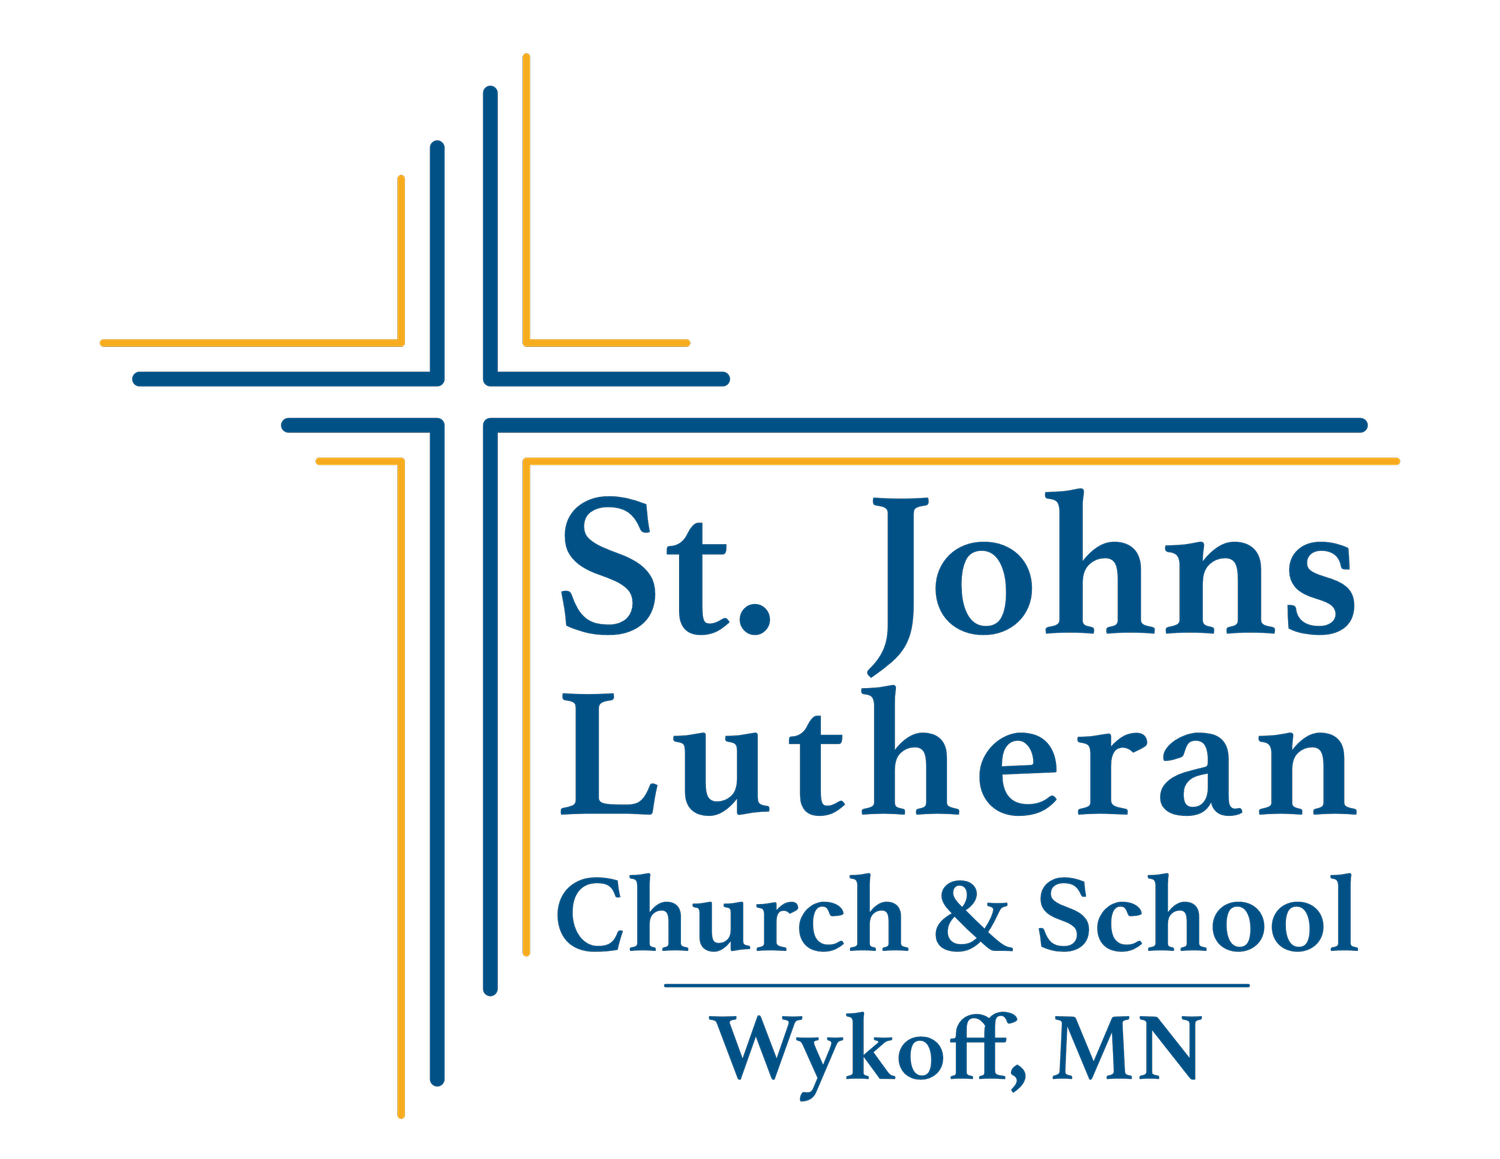 St. Johns Lutheran church &amp; School